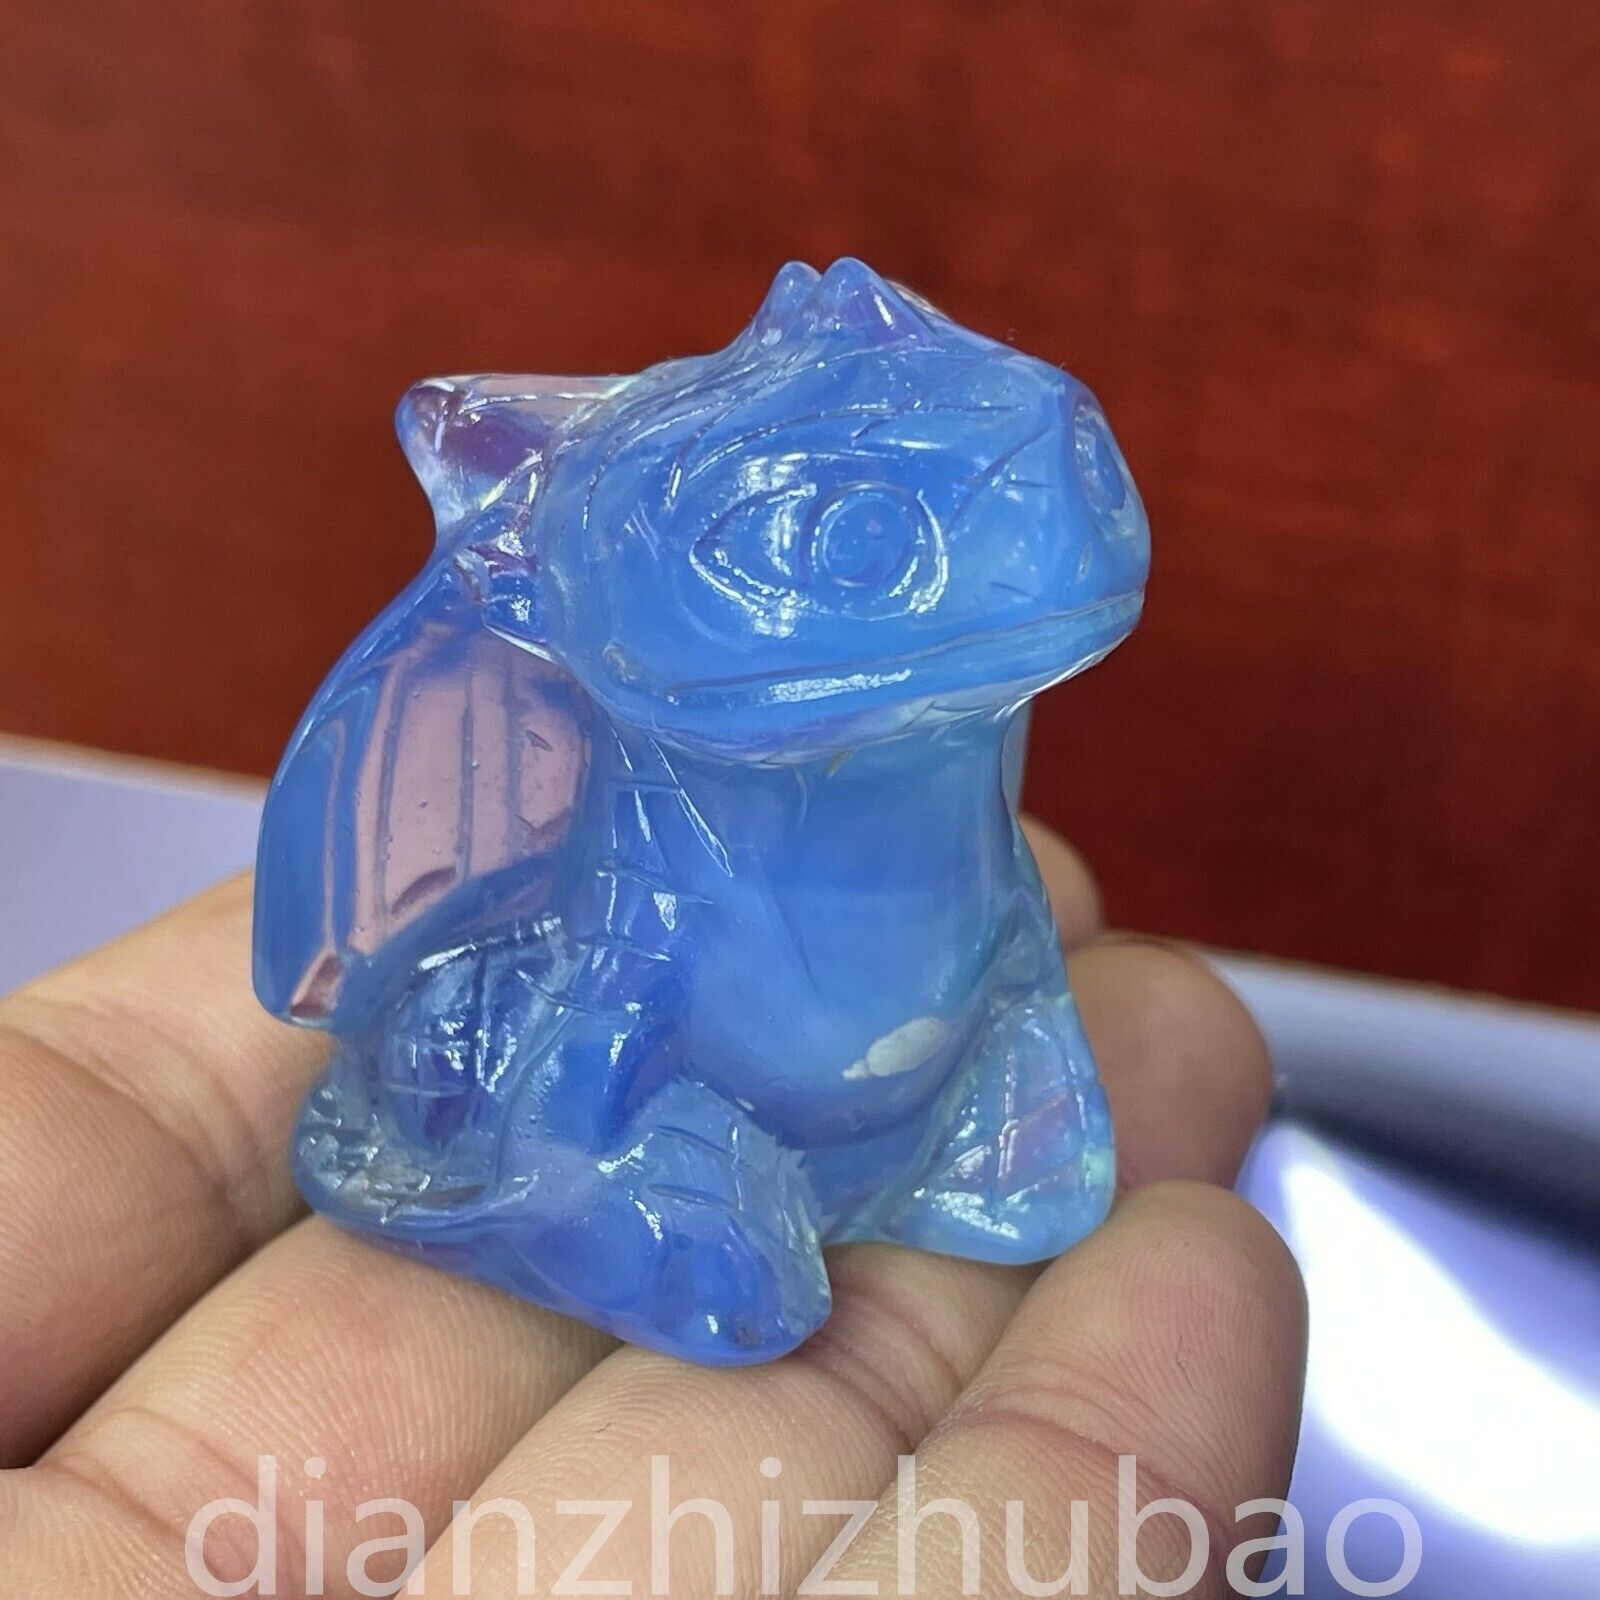 Blue protein Quartz hand Carved dragon crystal Reiki healing ornament 1pc